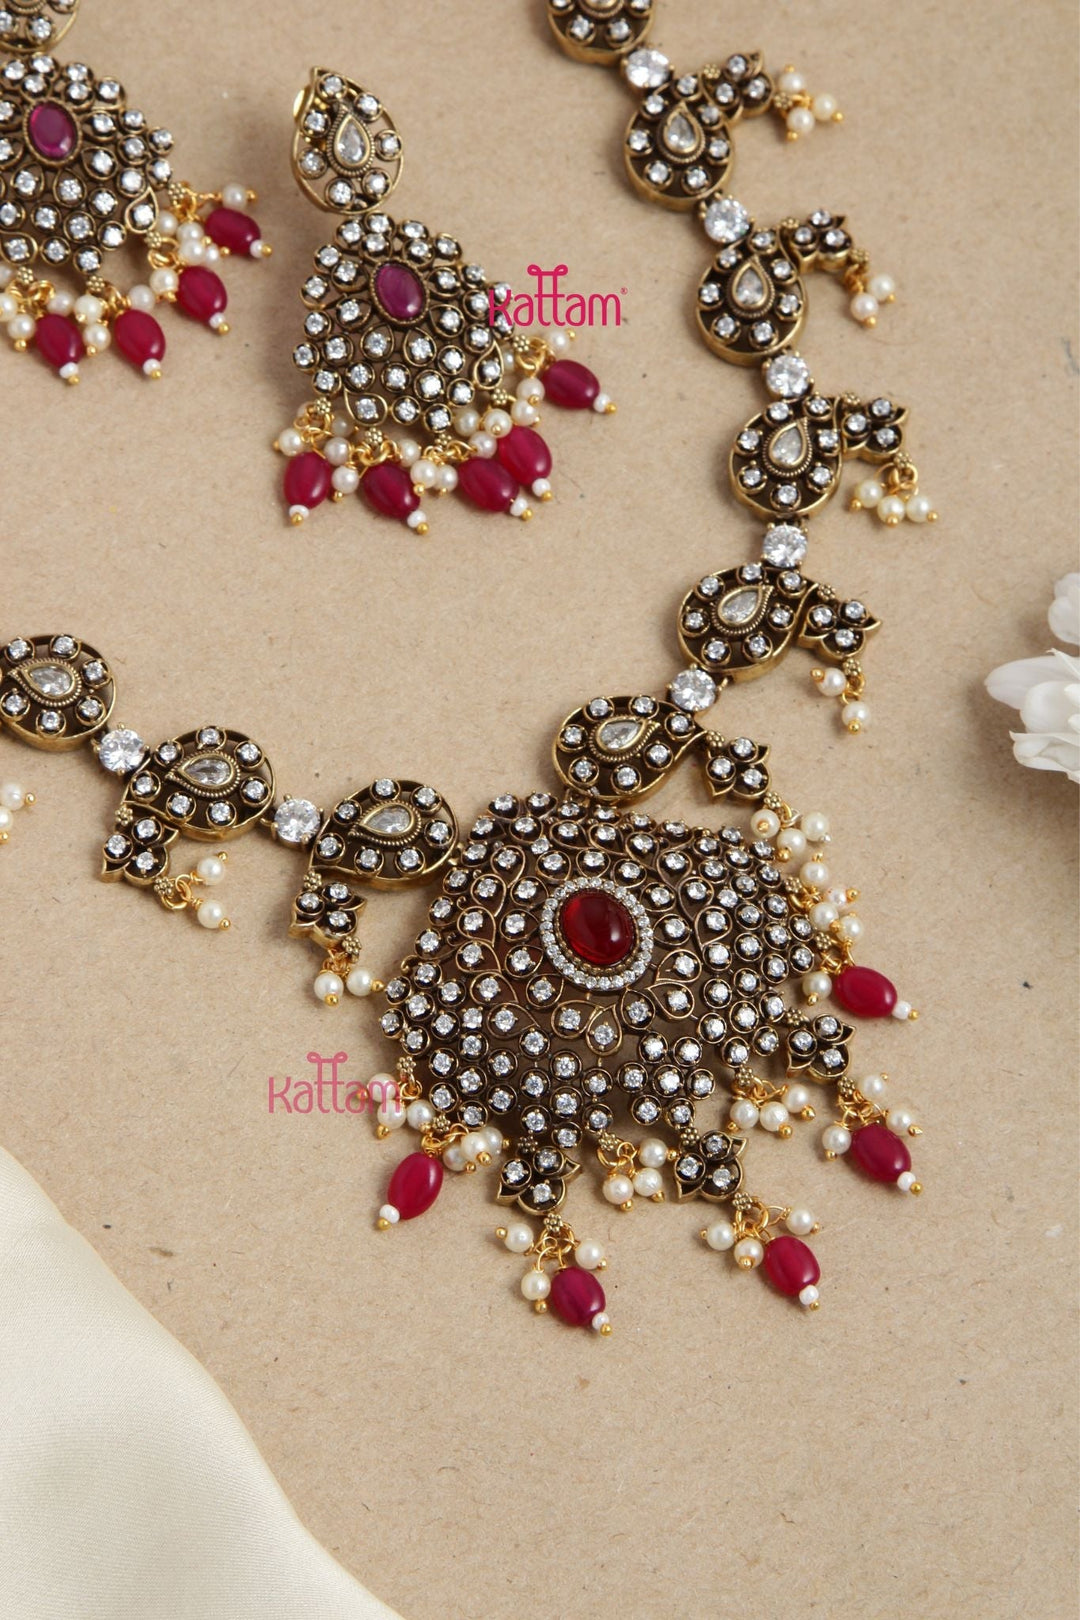 Mano - Victorian Paisley Black Polish Necklace - Ruby - N6046